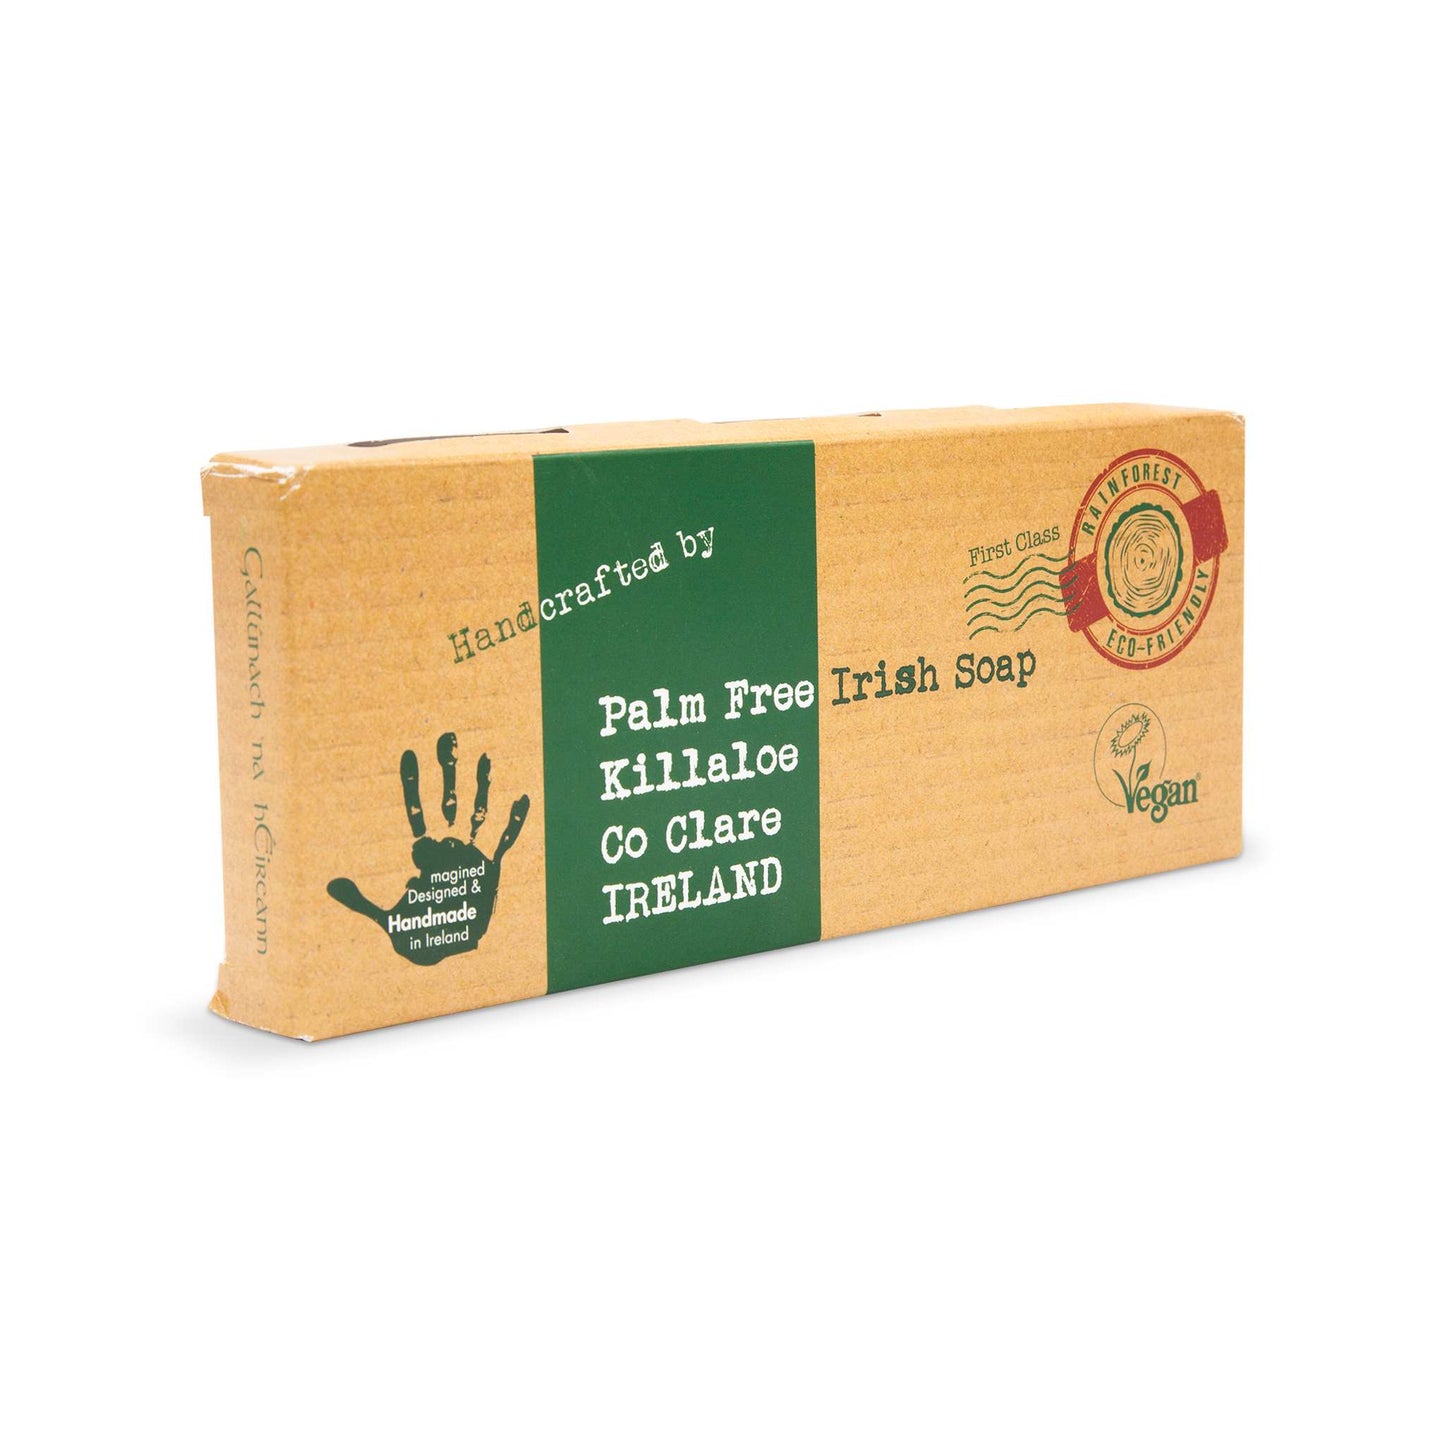 Palm Free Irish Soap Soap Palm Free Irish Soap Gift Box - 3 Bars